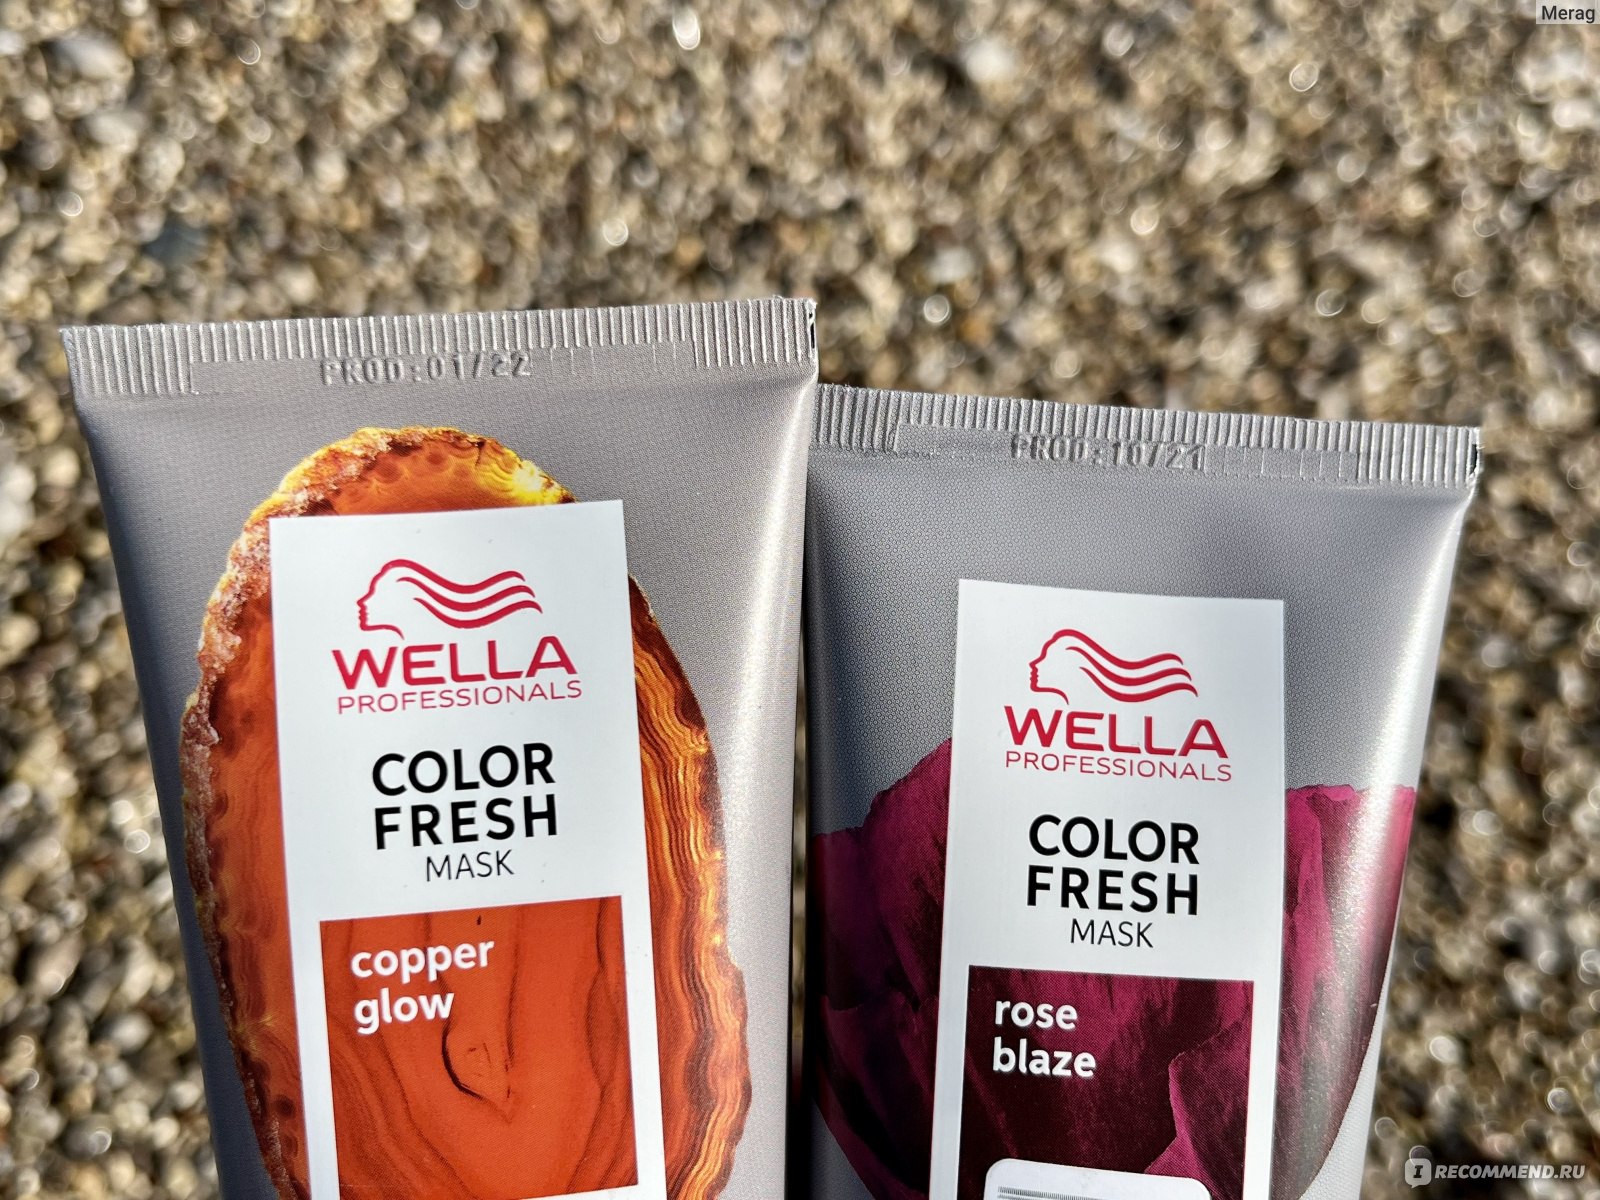 Wella color fresh маска. Маска Wella professional Color Fresh cool Espresso. Wella Color Fresh Mask отзывы.